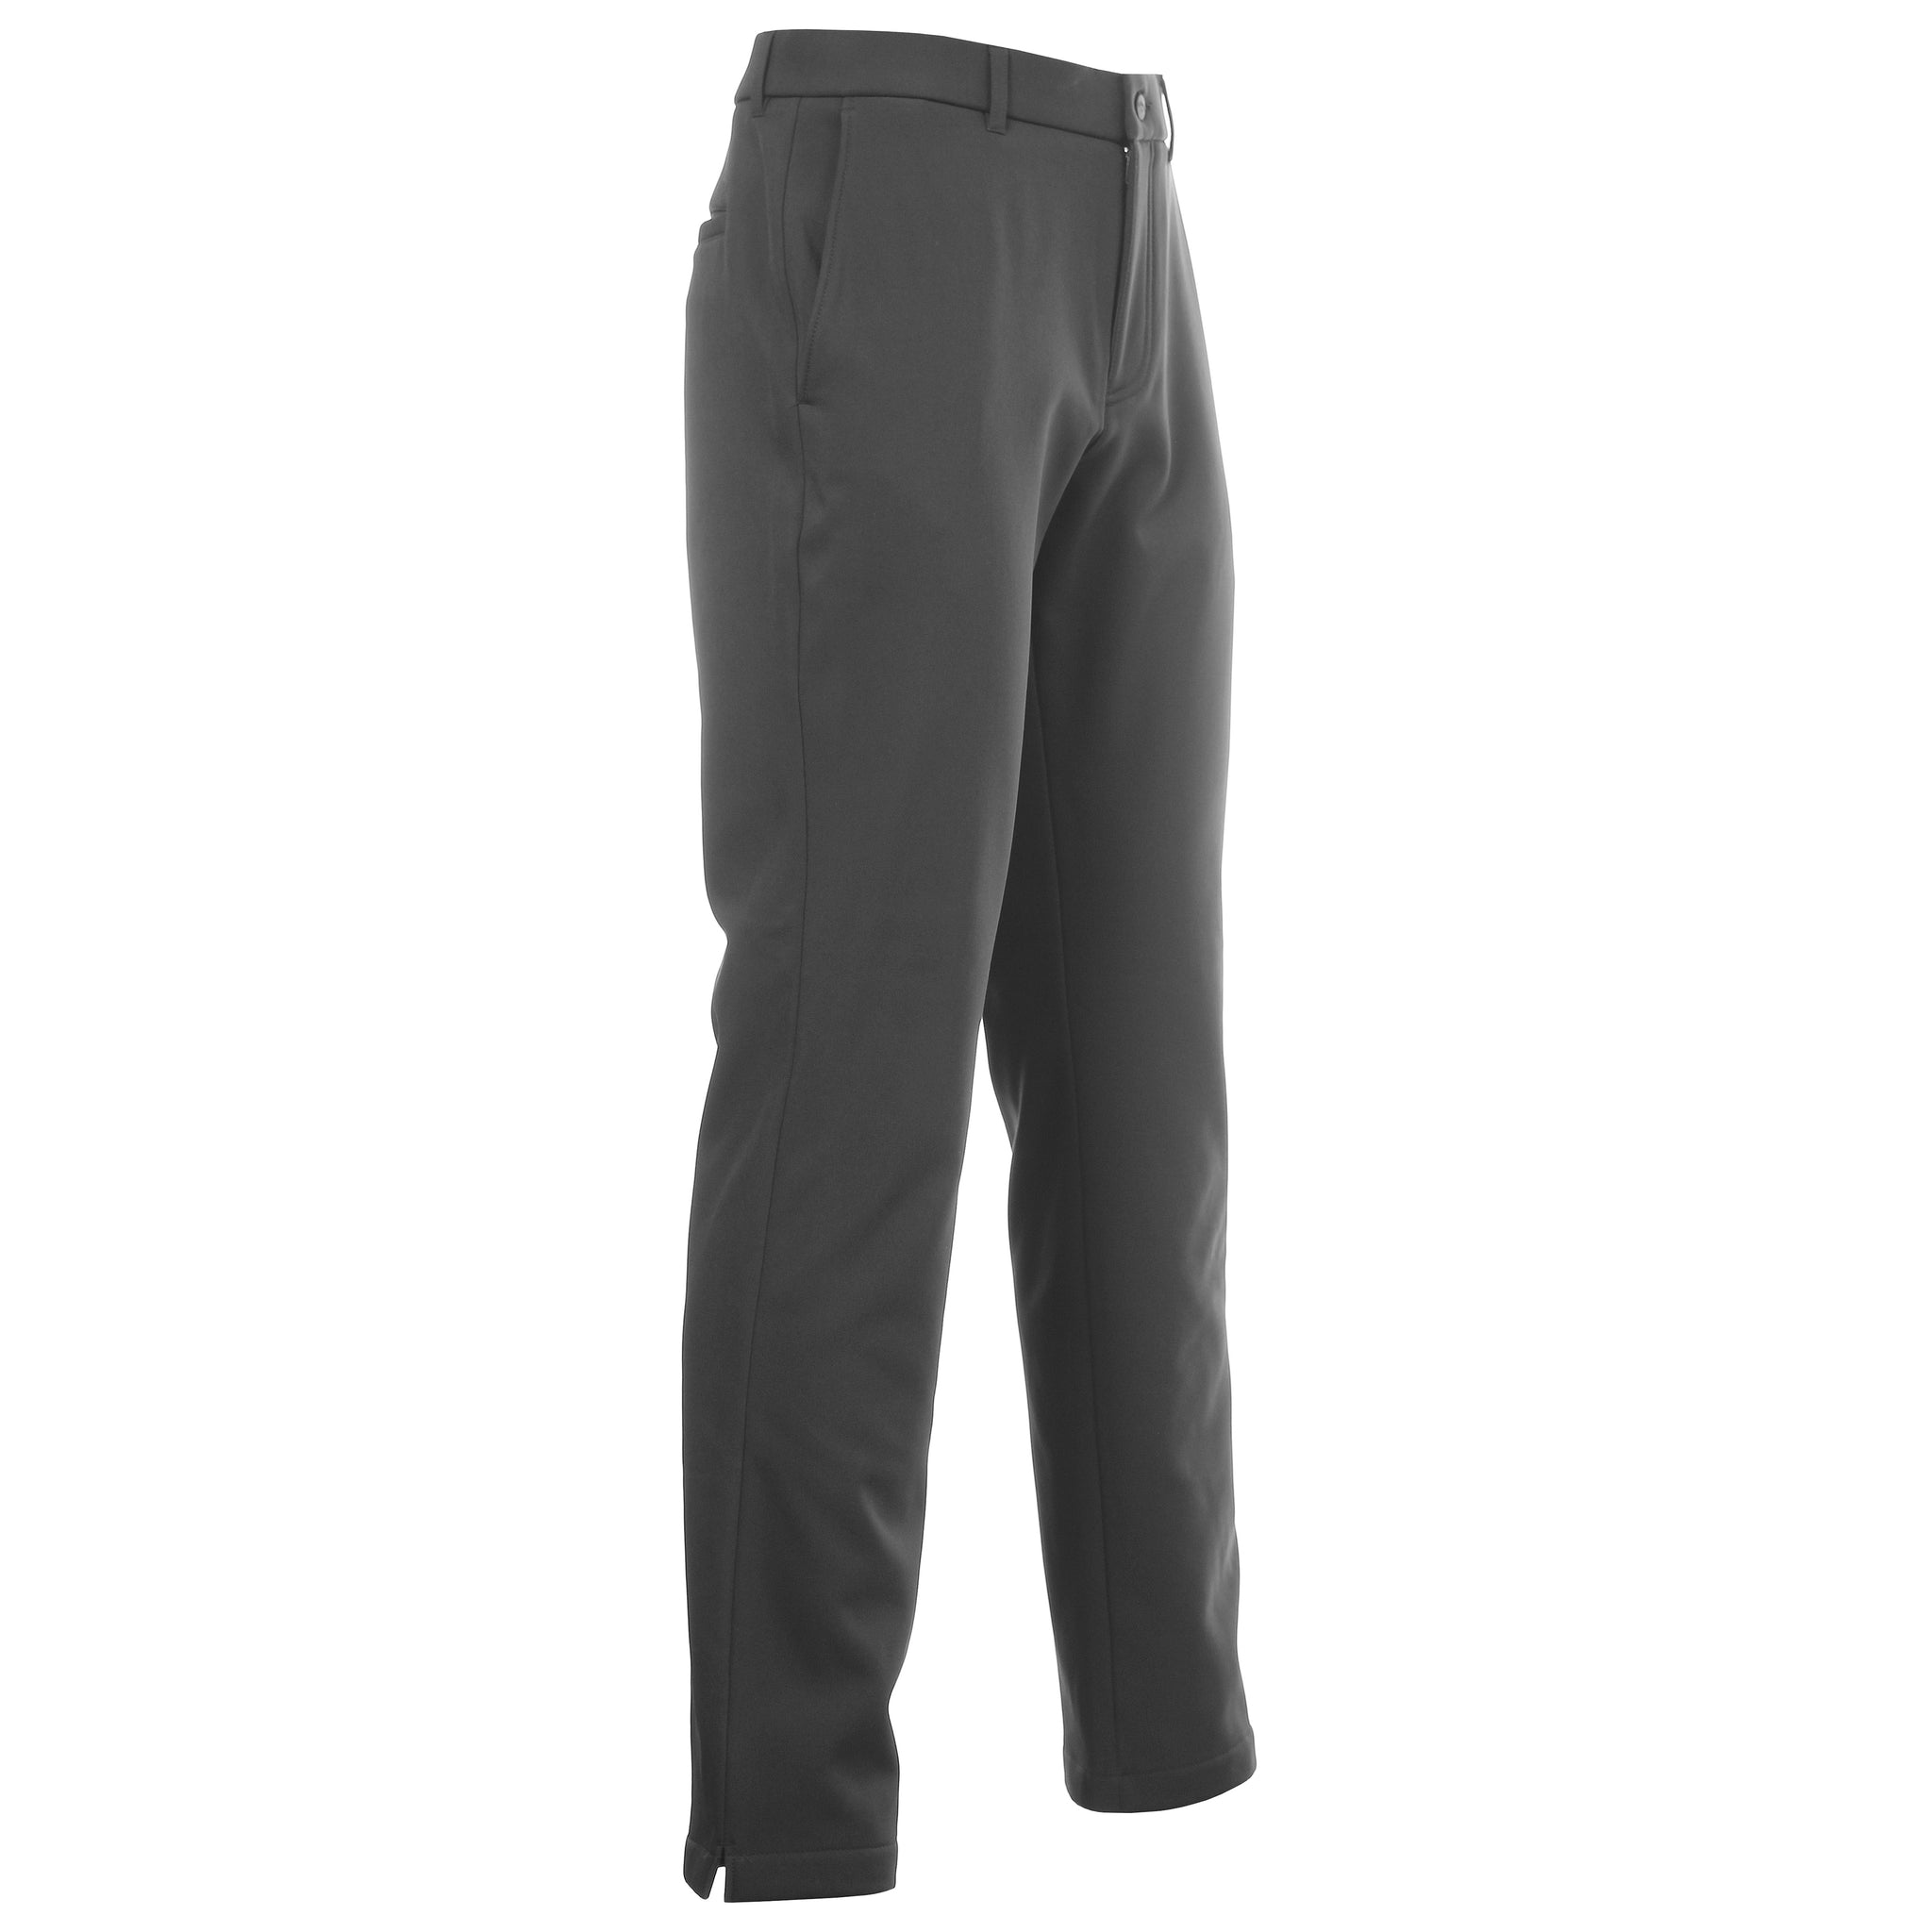 Callaway Golf Winter Thermal Trousers CGBFB028 Asphalt 067 & Function18